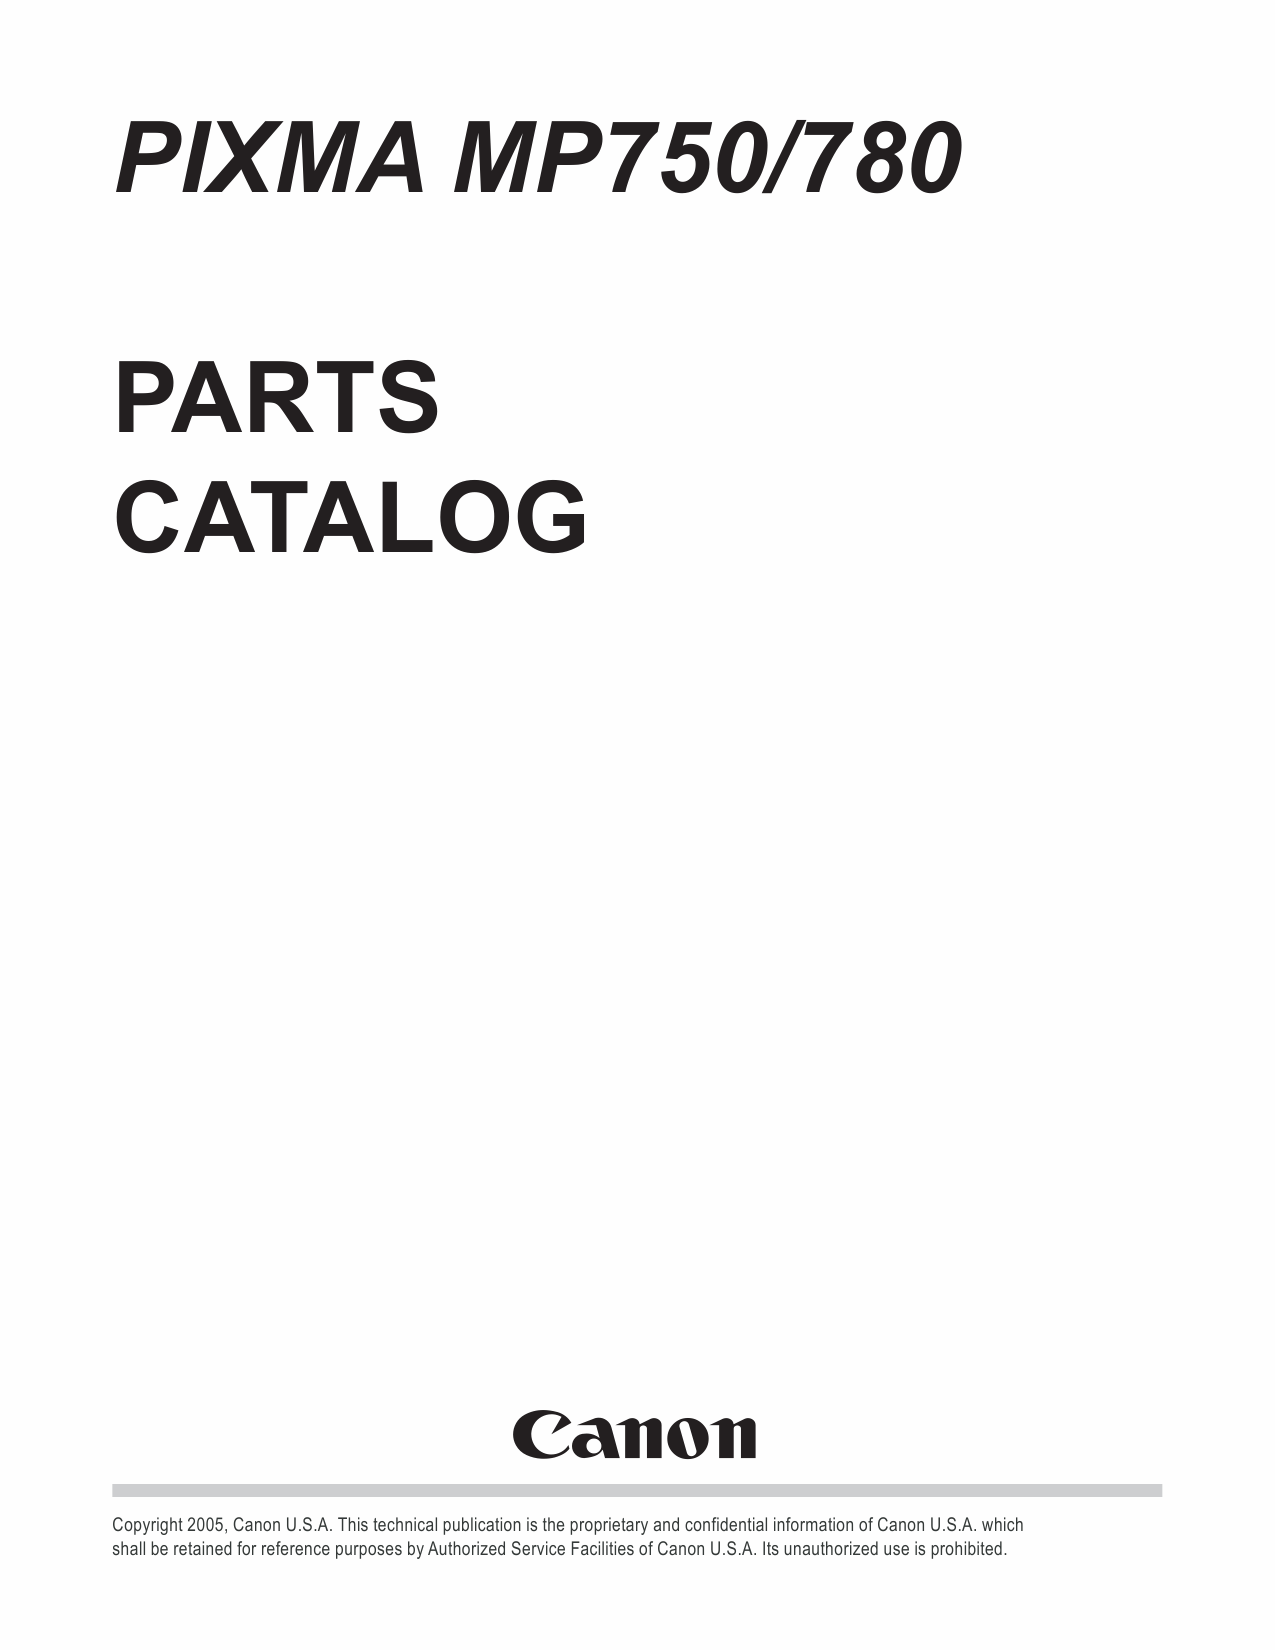 Canon PIXMA MP780 MP750 Parts Catalog Manual-1